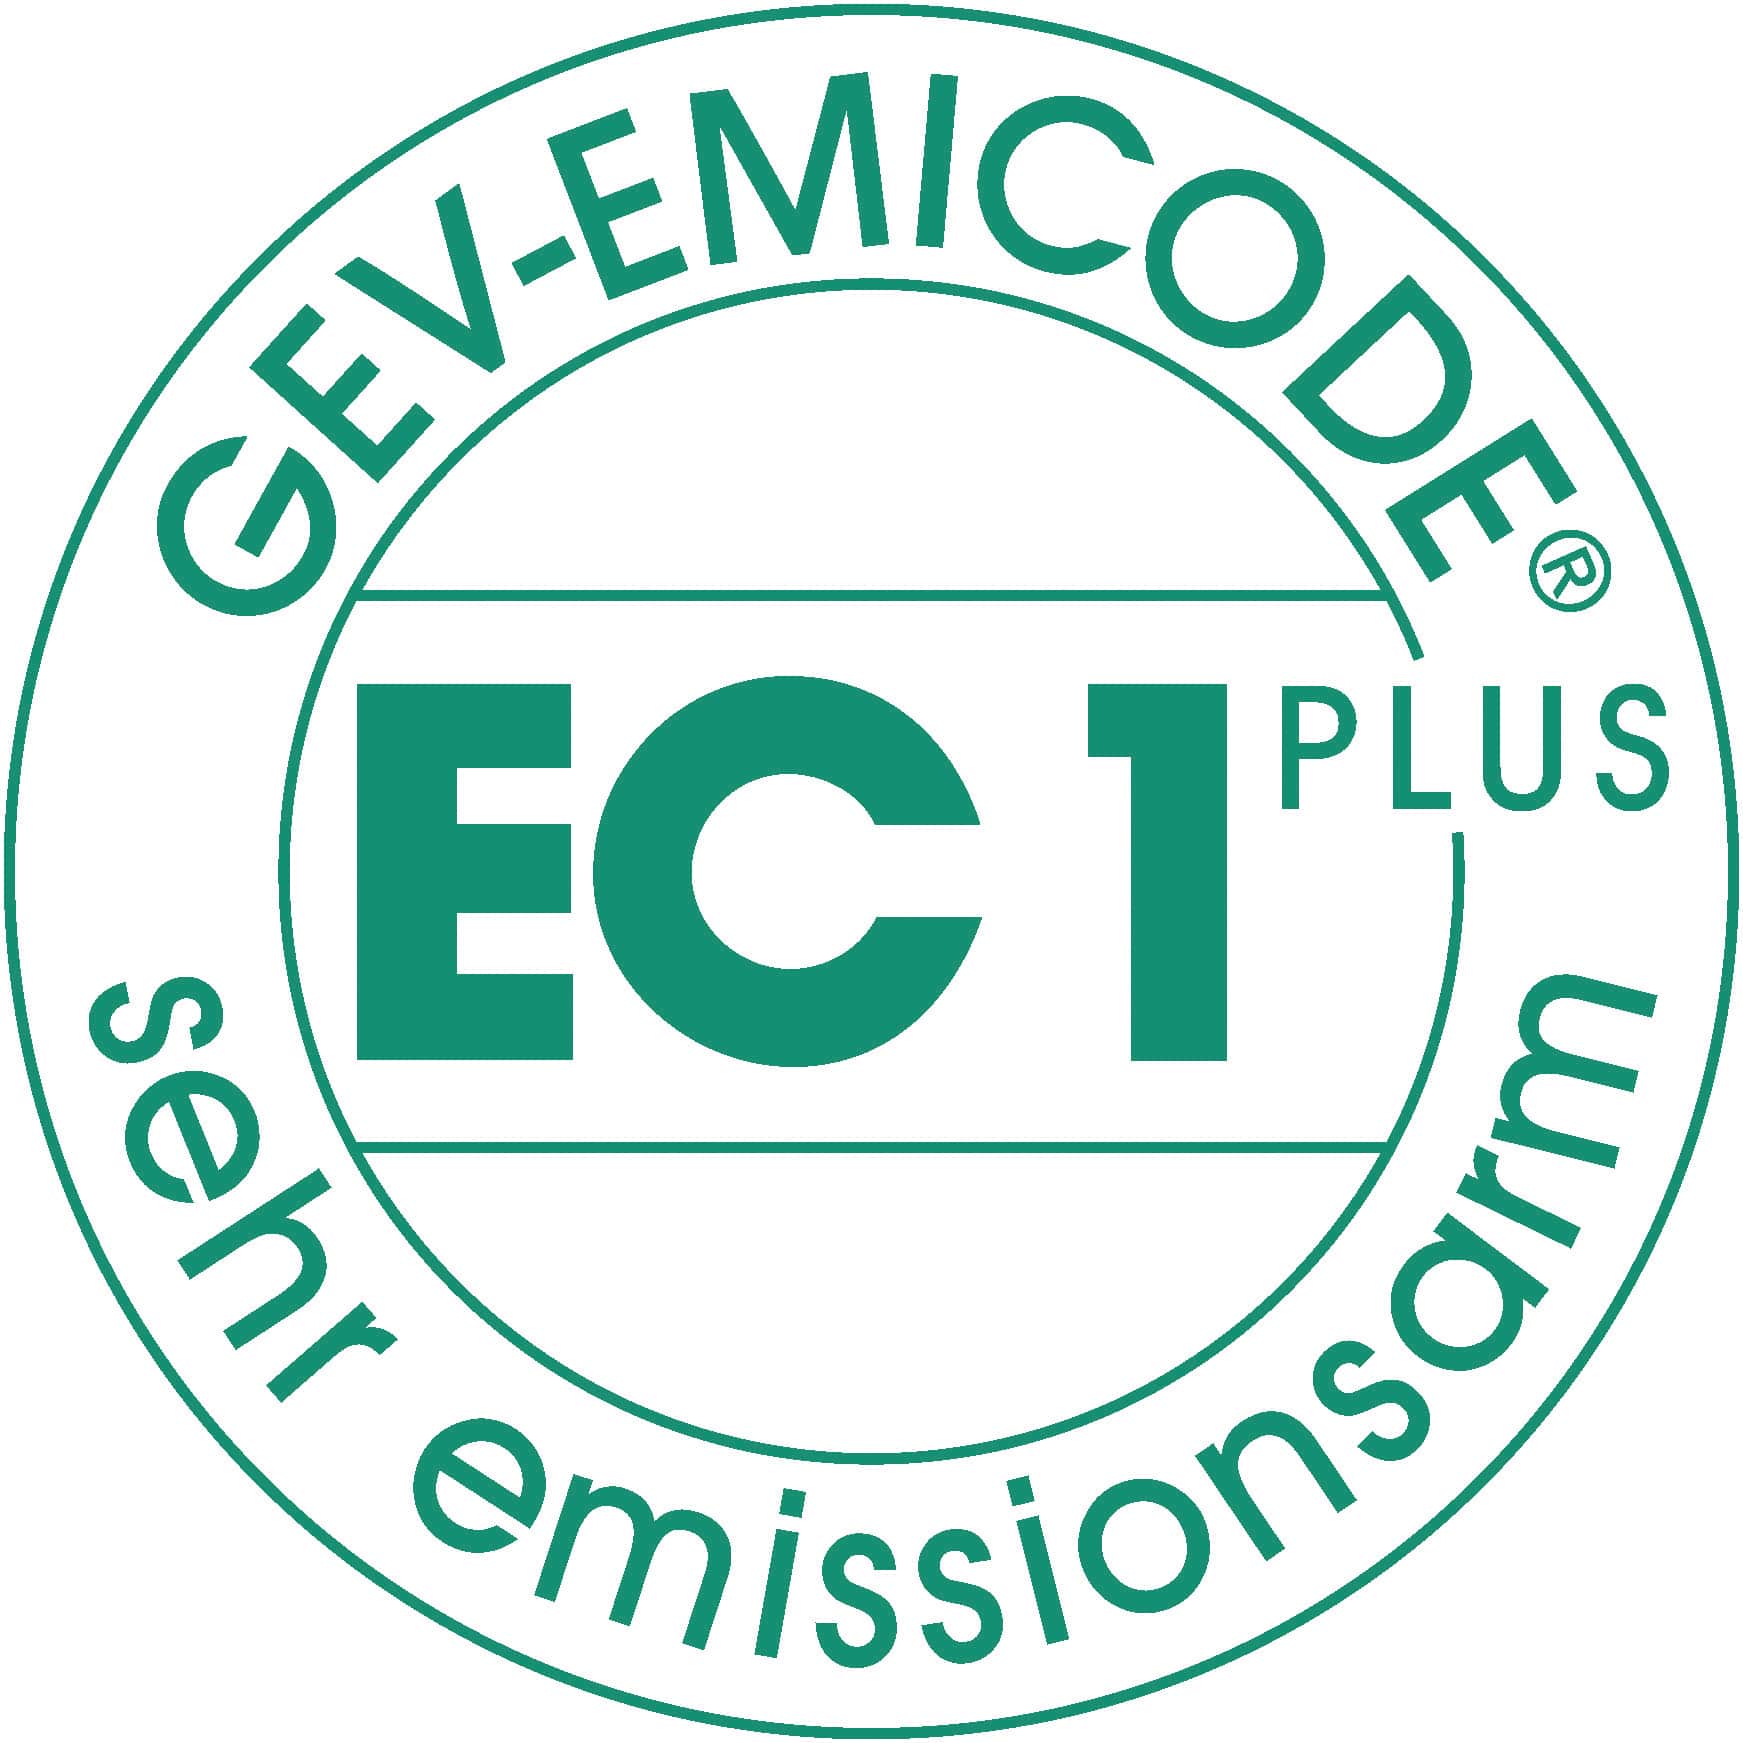 GEV-EMICODE EC1 plus sehr emissionsarm